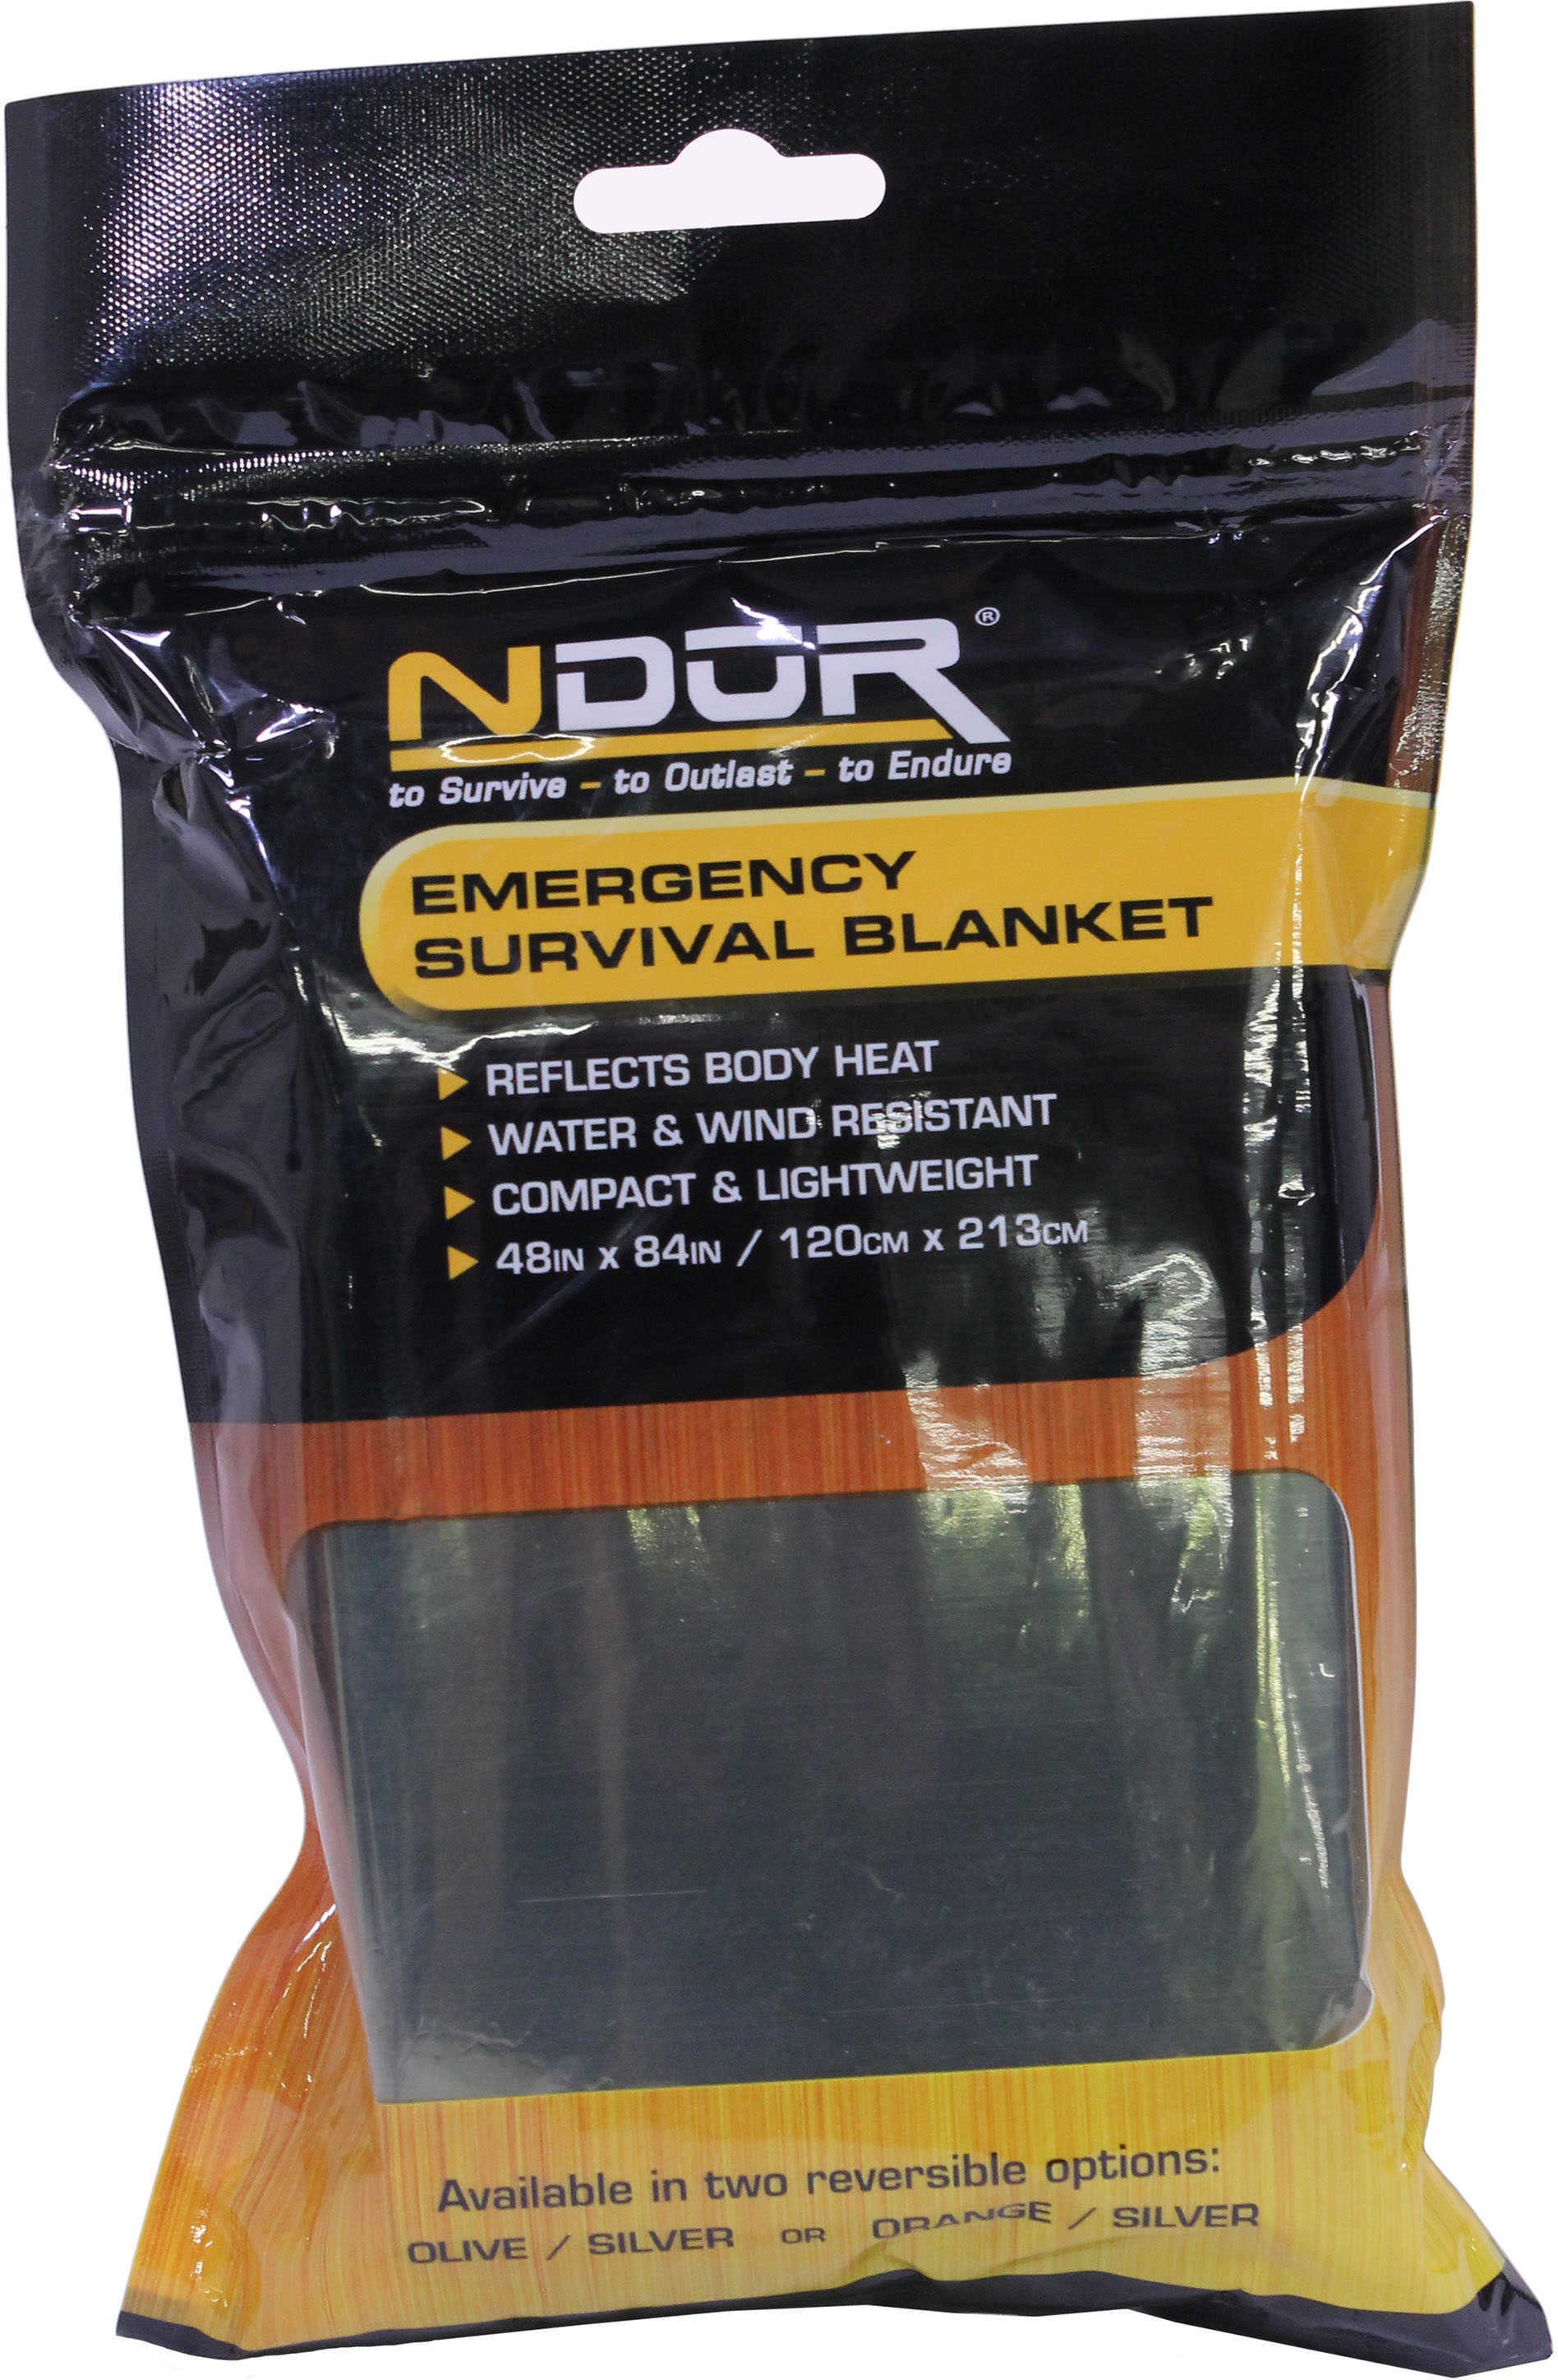 Ndur Emergency Survival Blanket Olive /silver